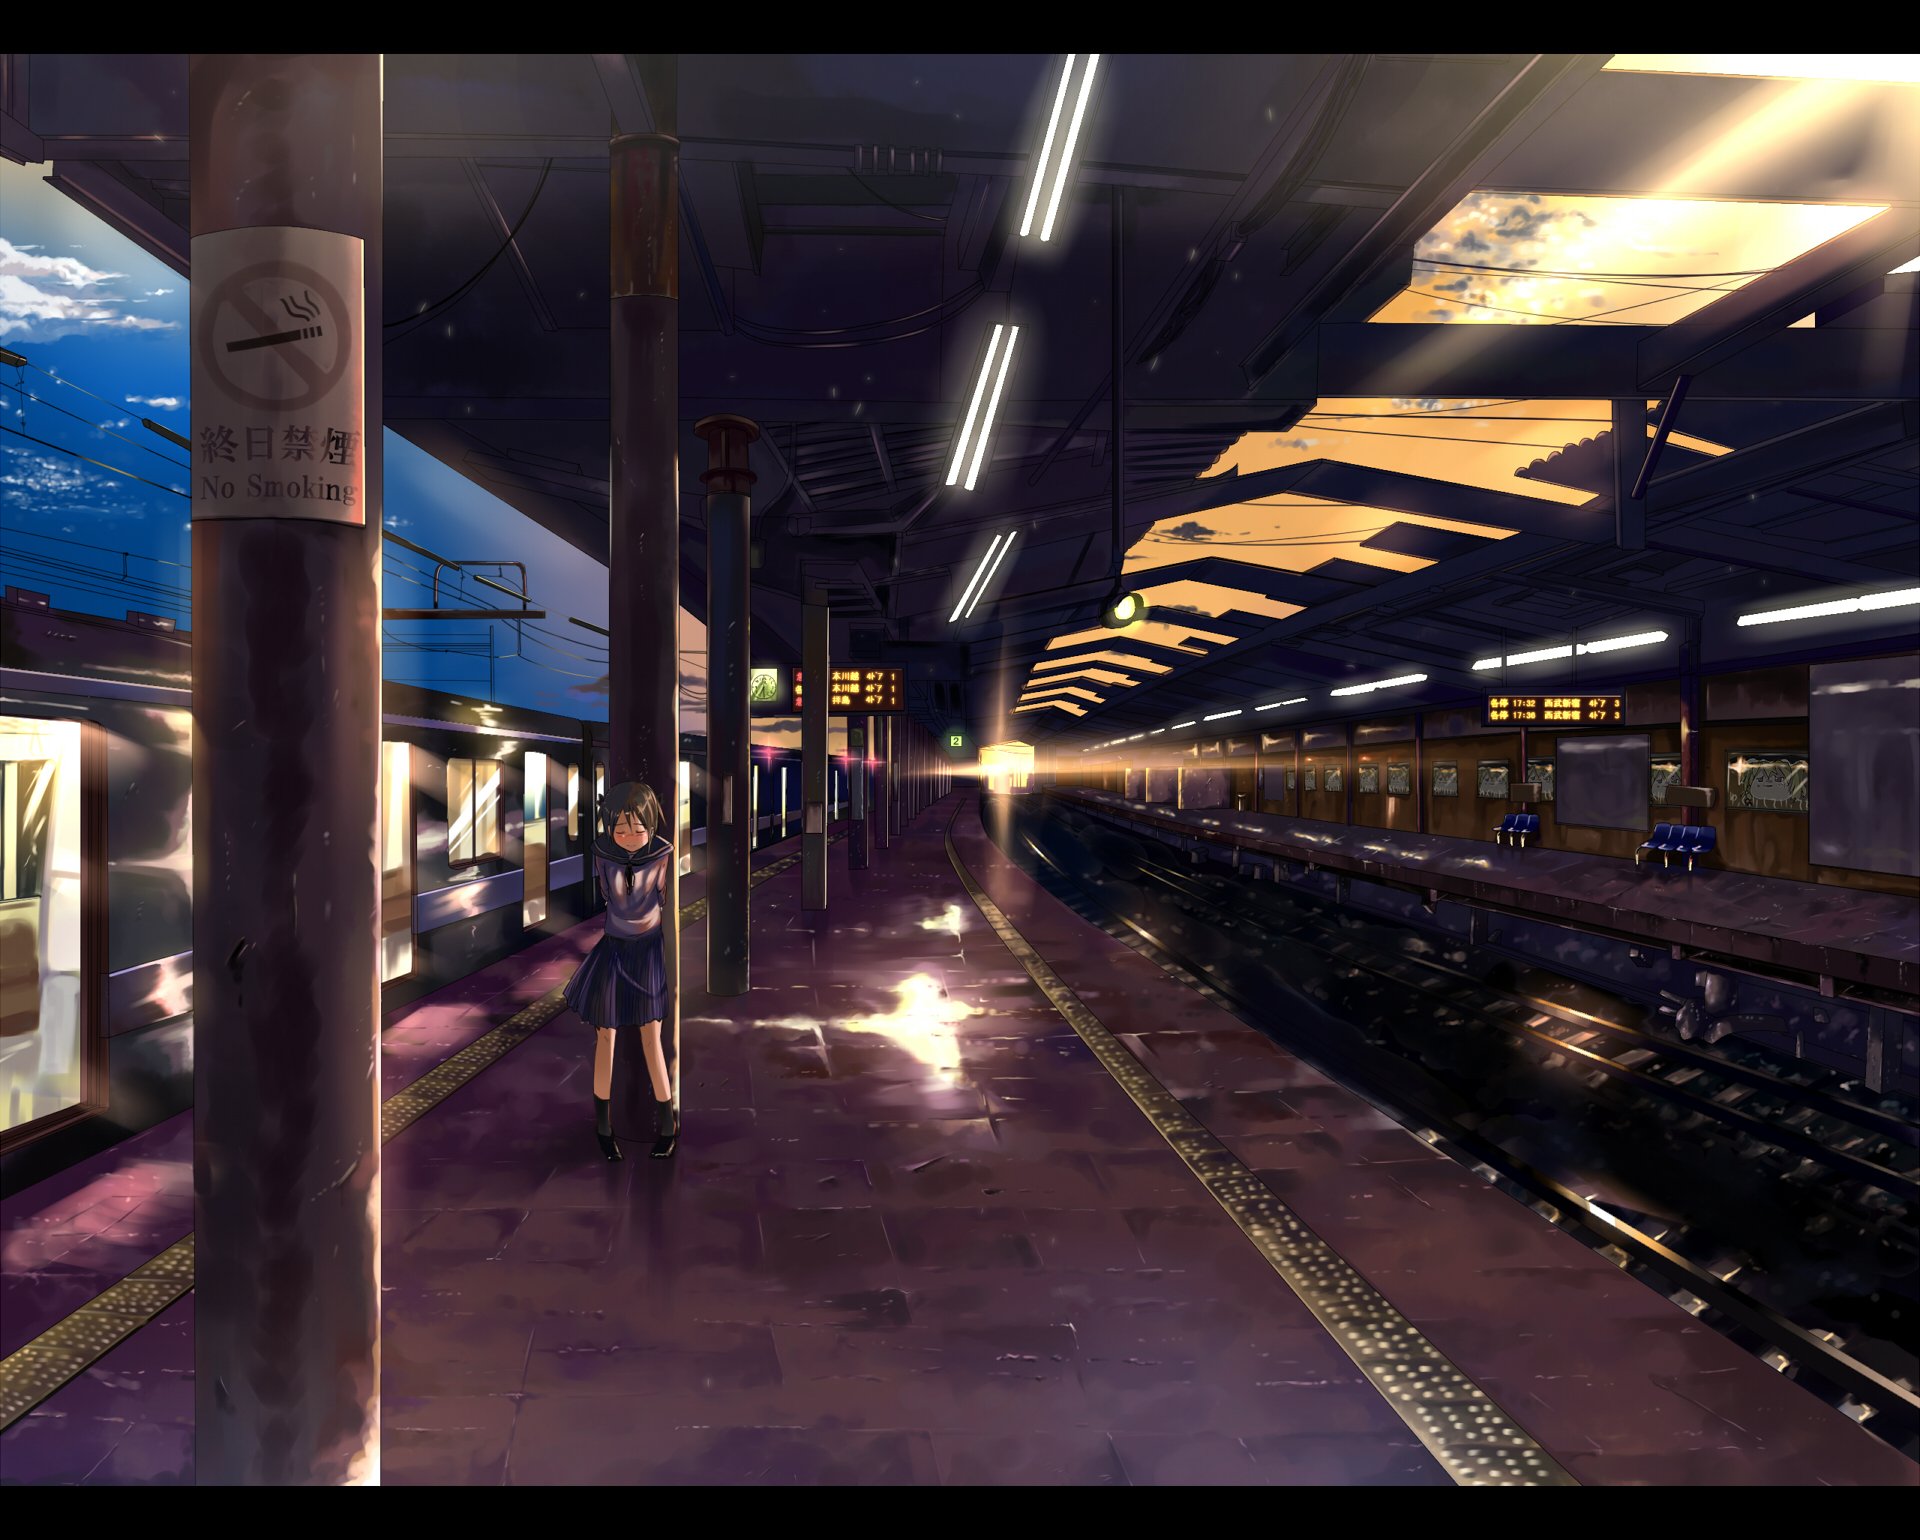 Location: Yoyogi Station, Tokyo #japan #tokyo #anime #trains - YouTube